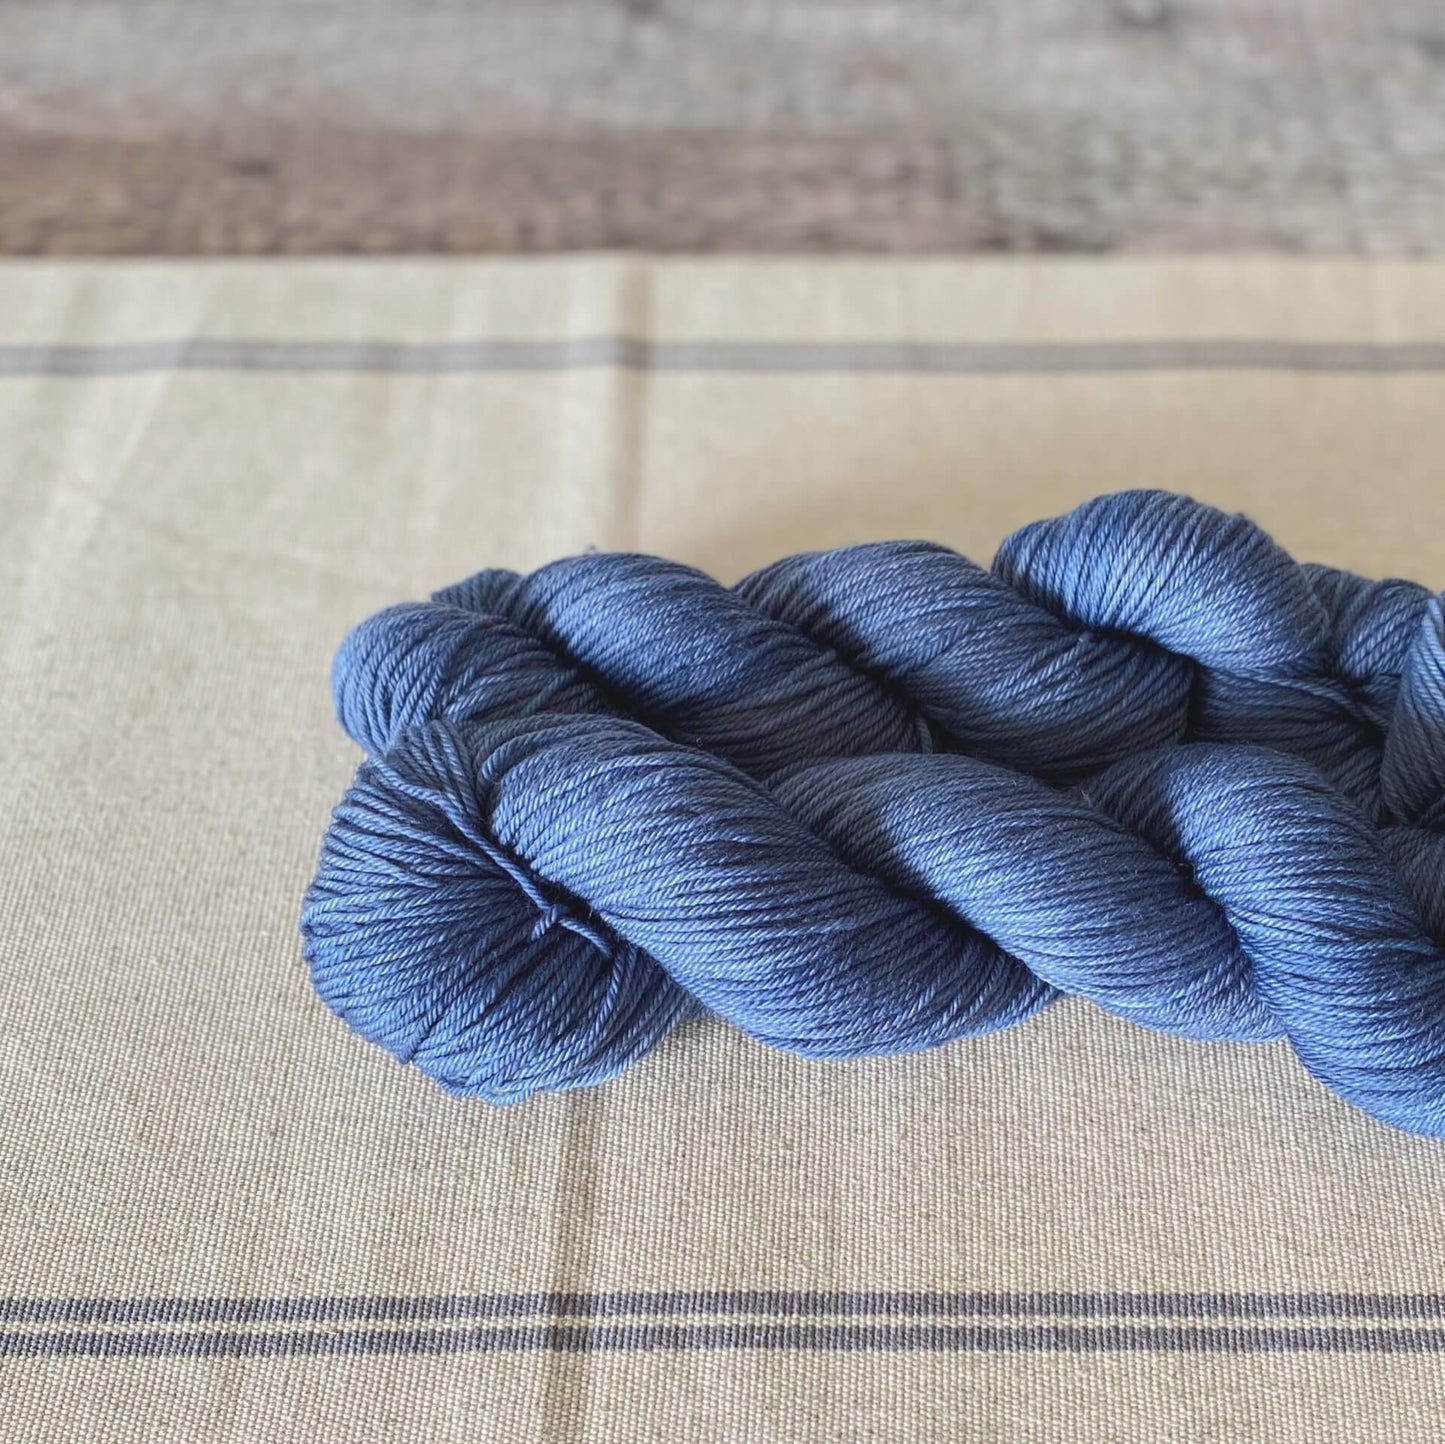 Hand Dyed Yarn - Merino Nylon DK - I Guess...